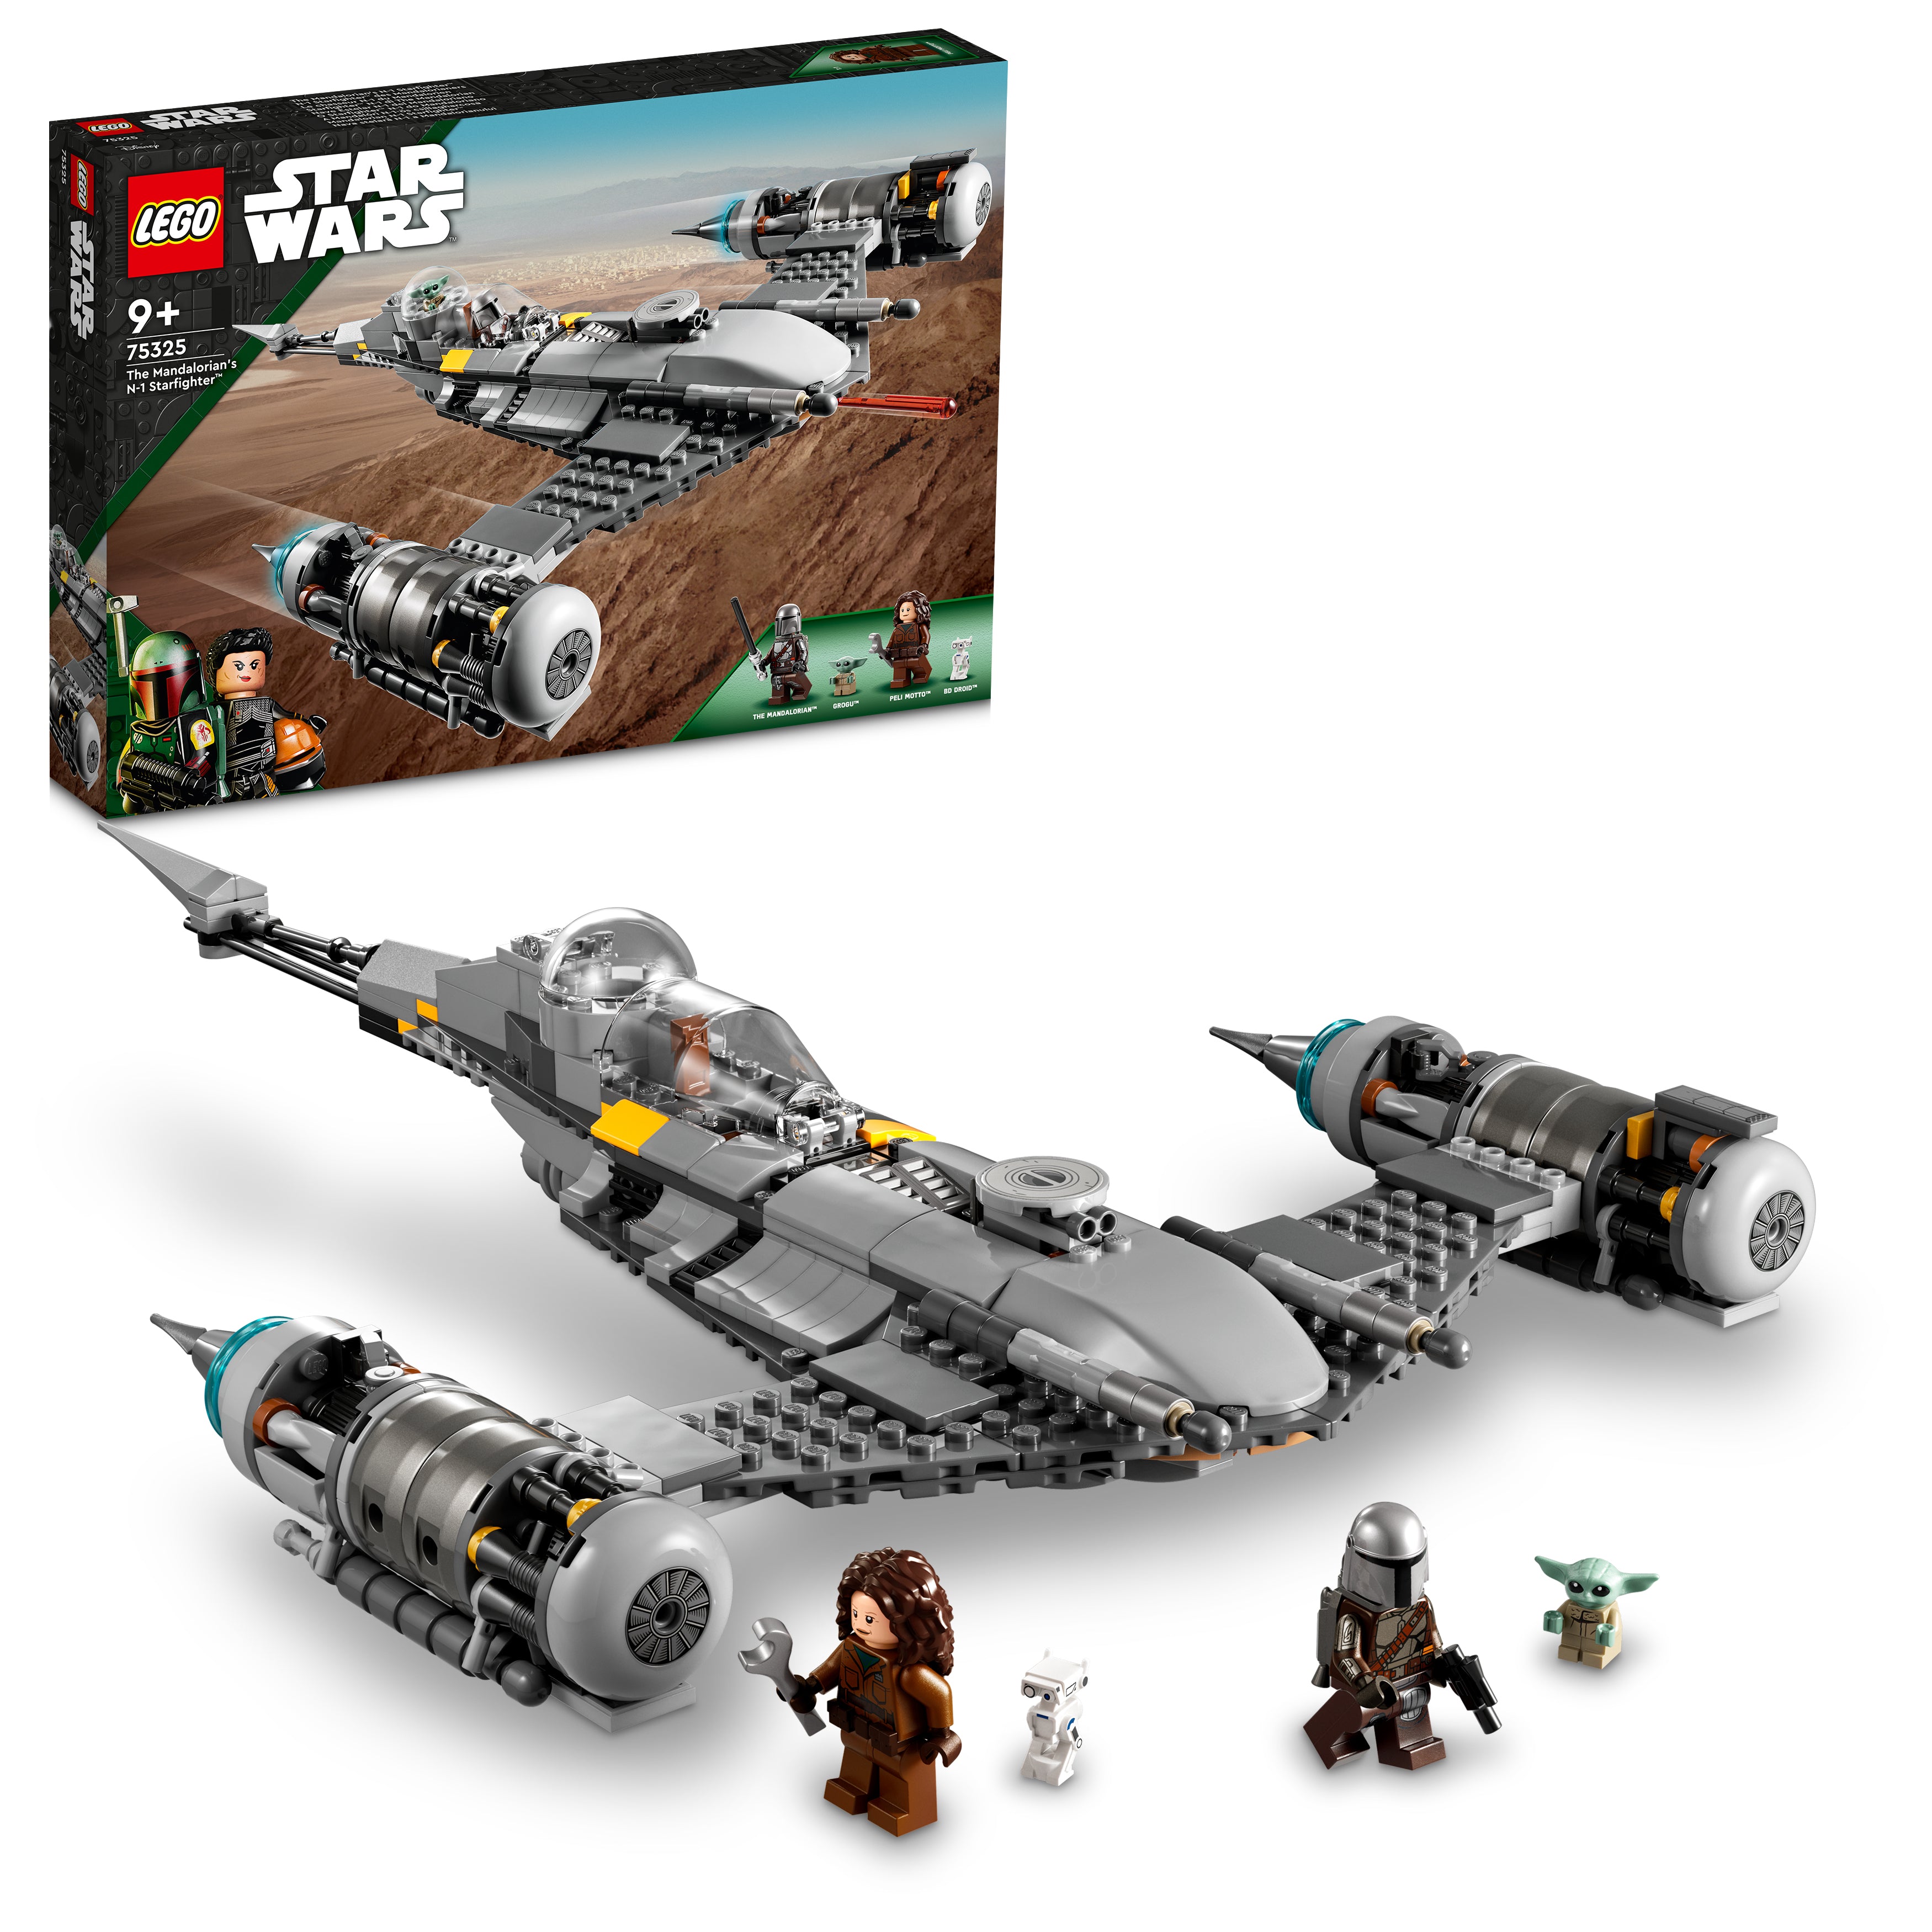 Lego 75325 The Mandalorians N-1 Starfighter